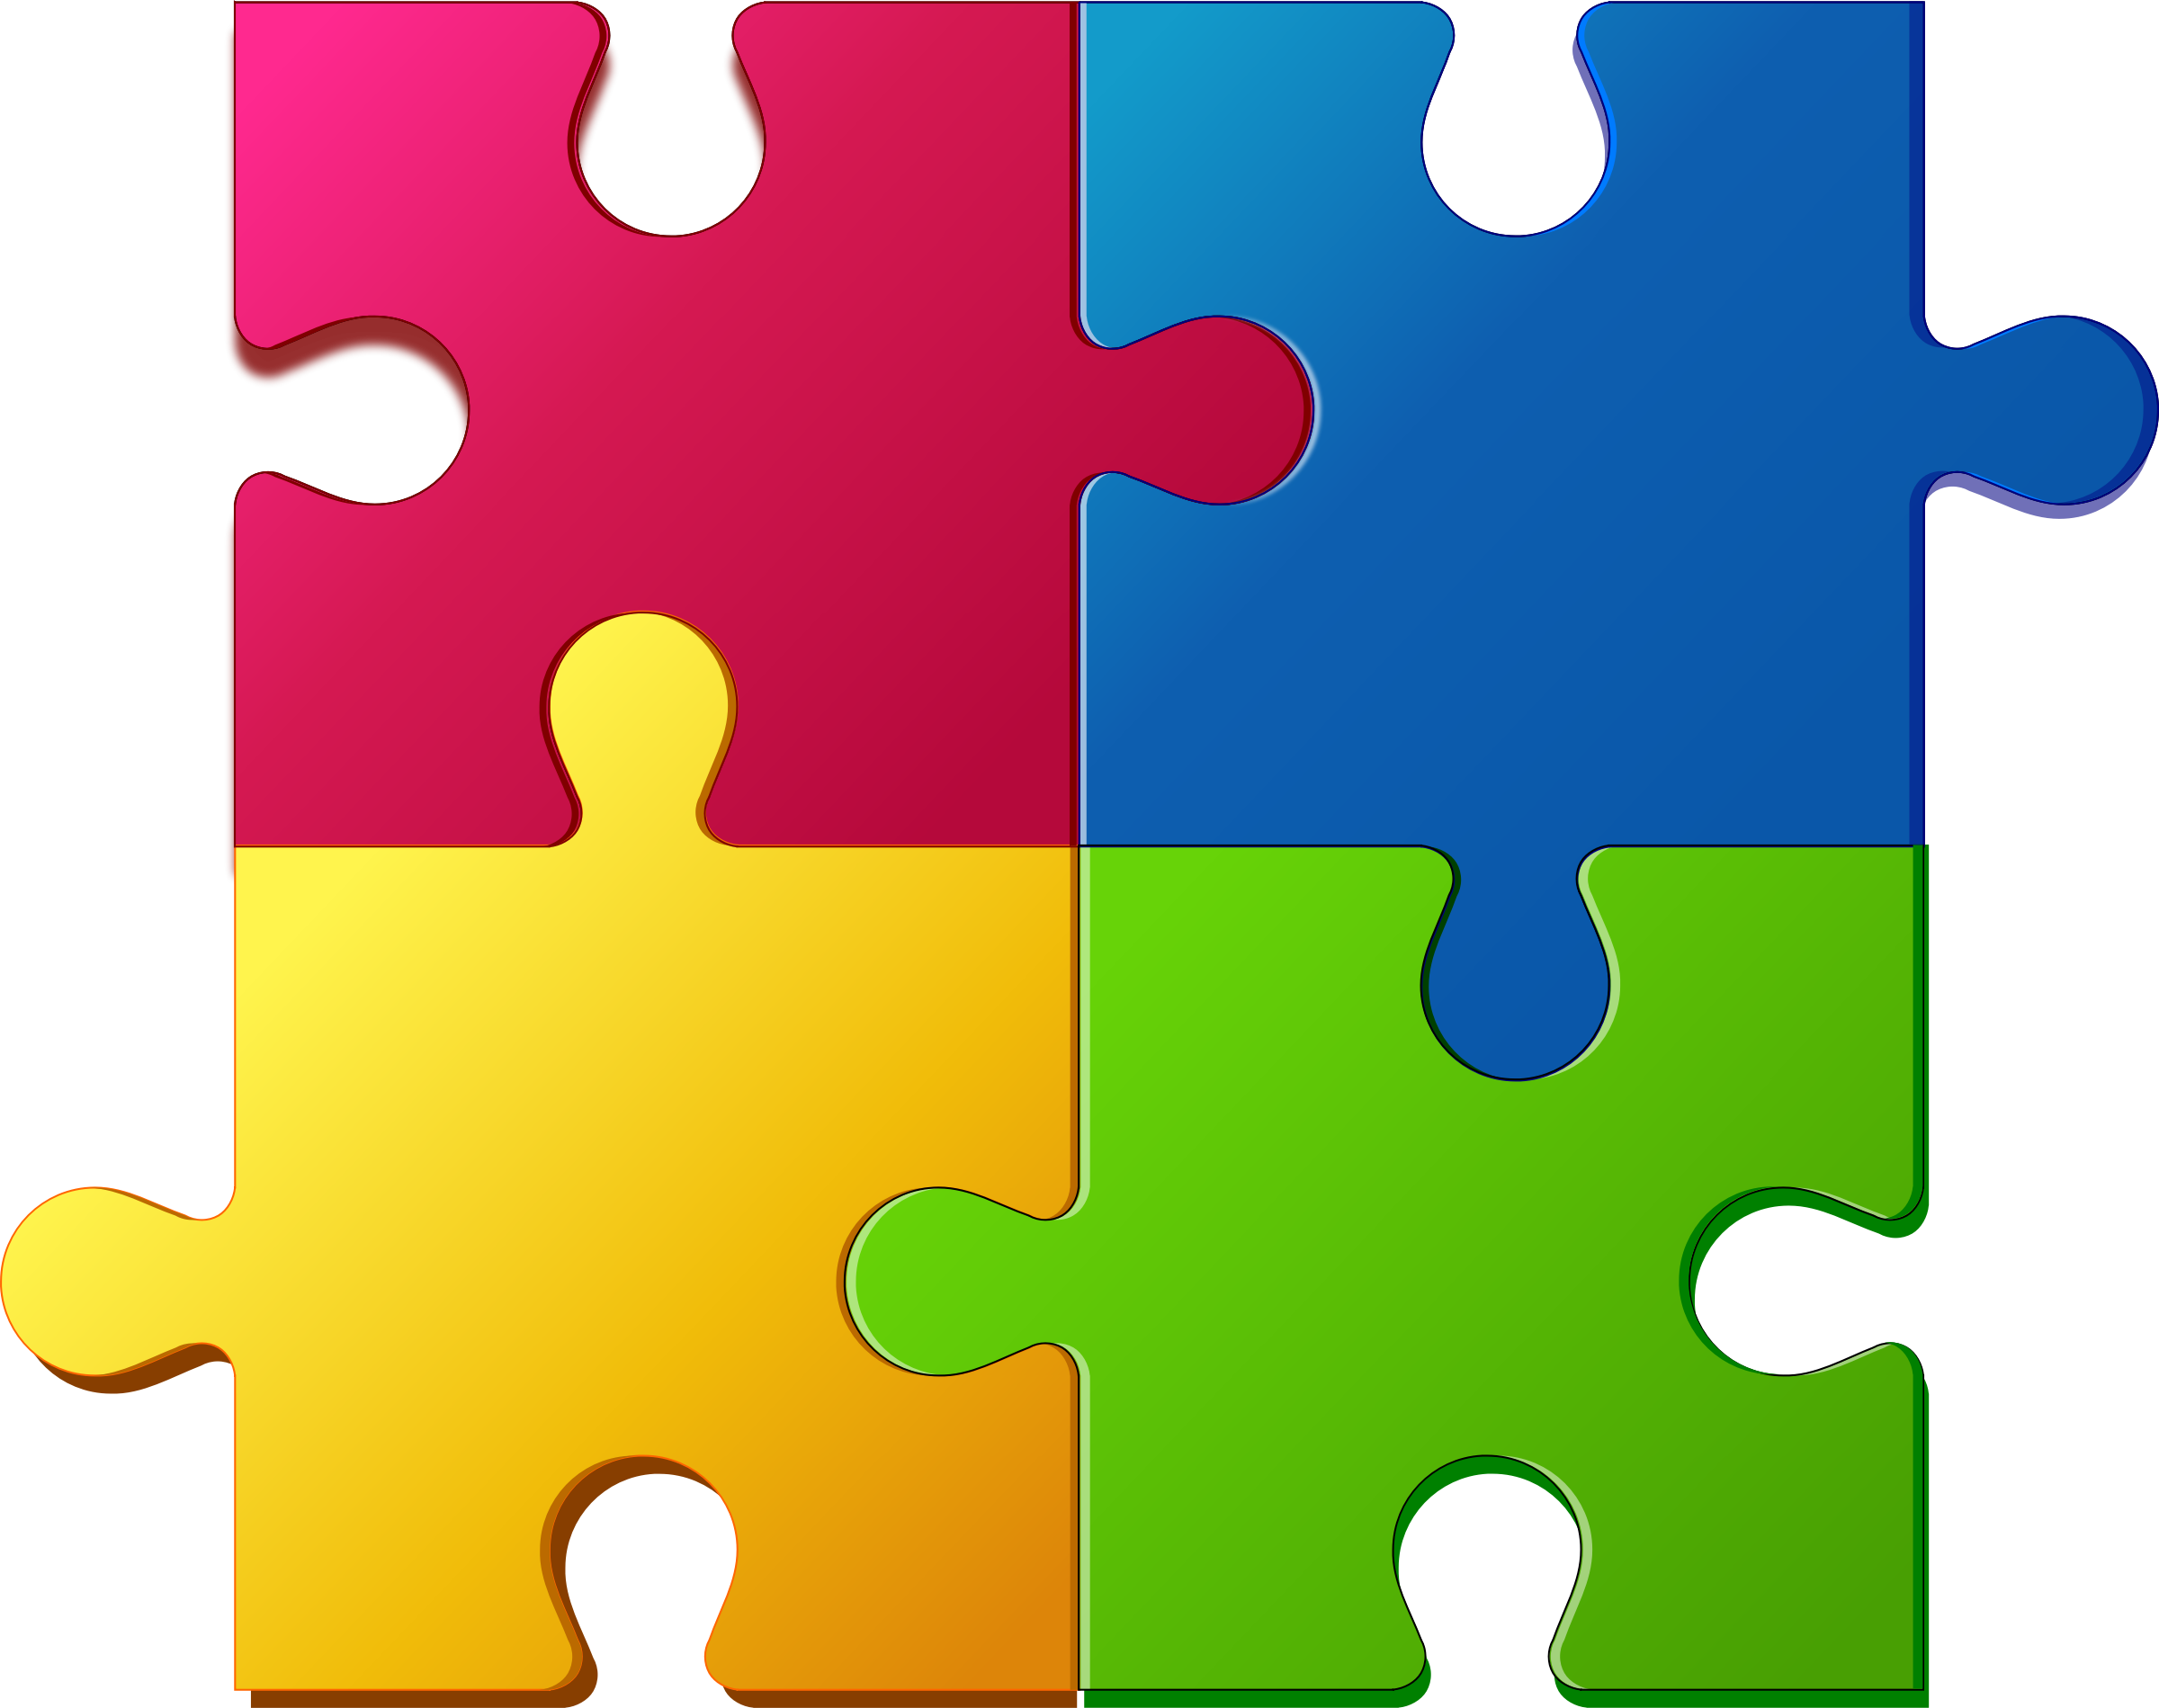 Jigsaw puzzles clipart - ClipartFox